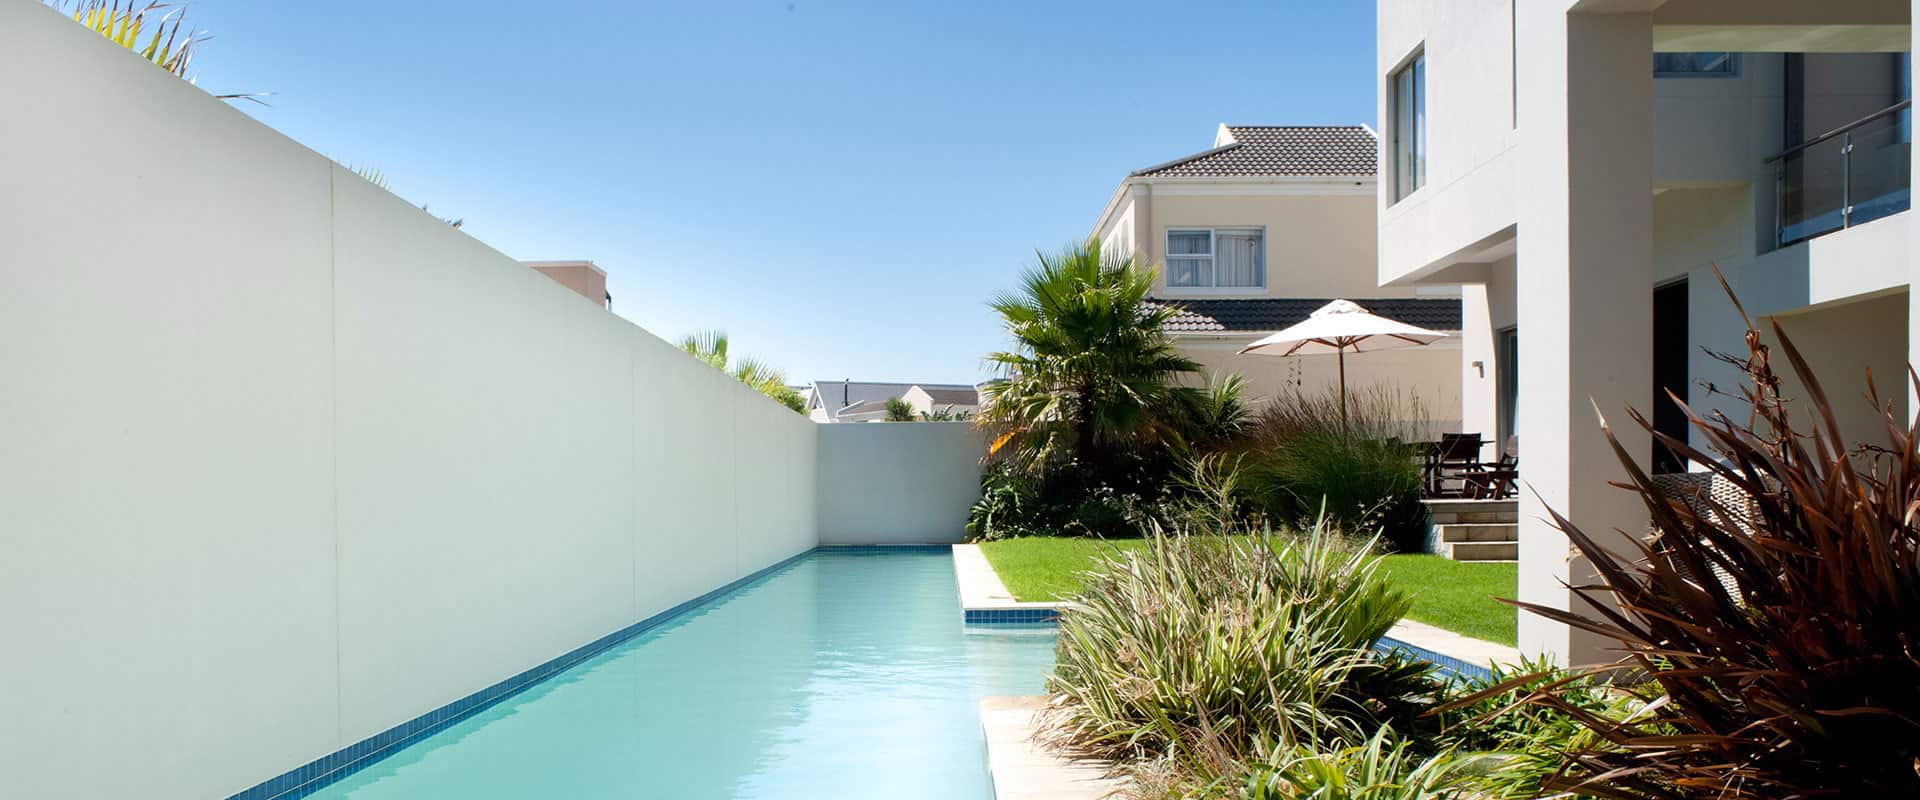 da Heim Guesthouse Kapstadt Pool und Garten